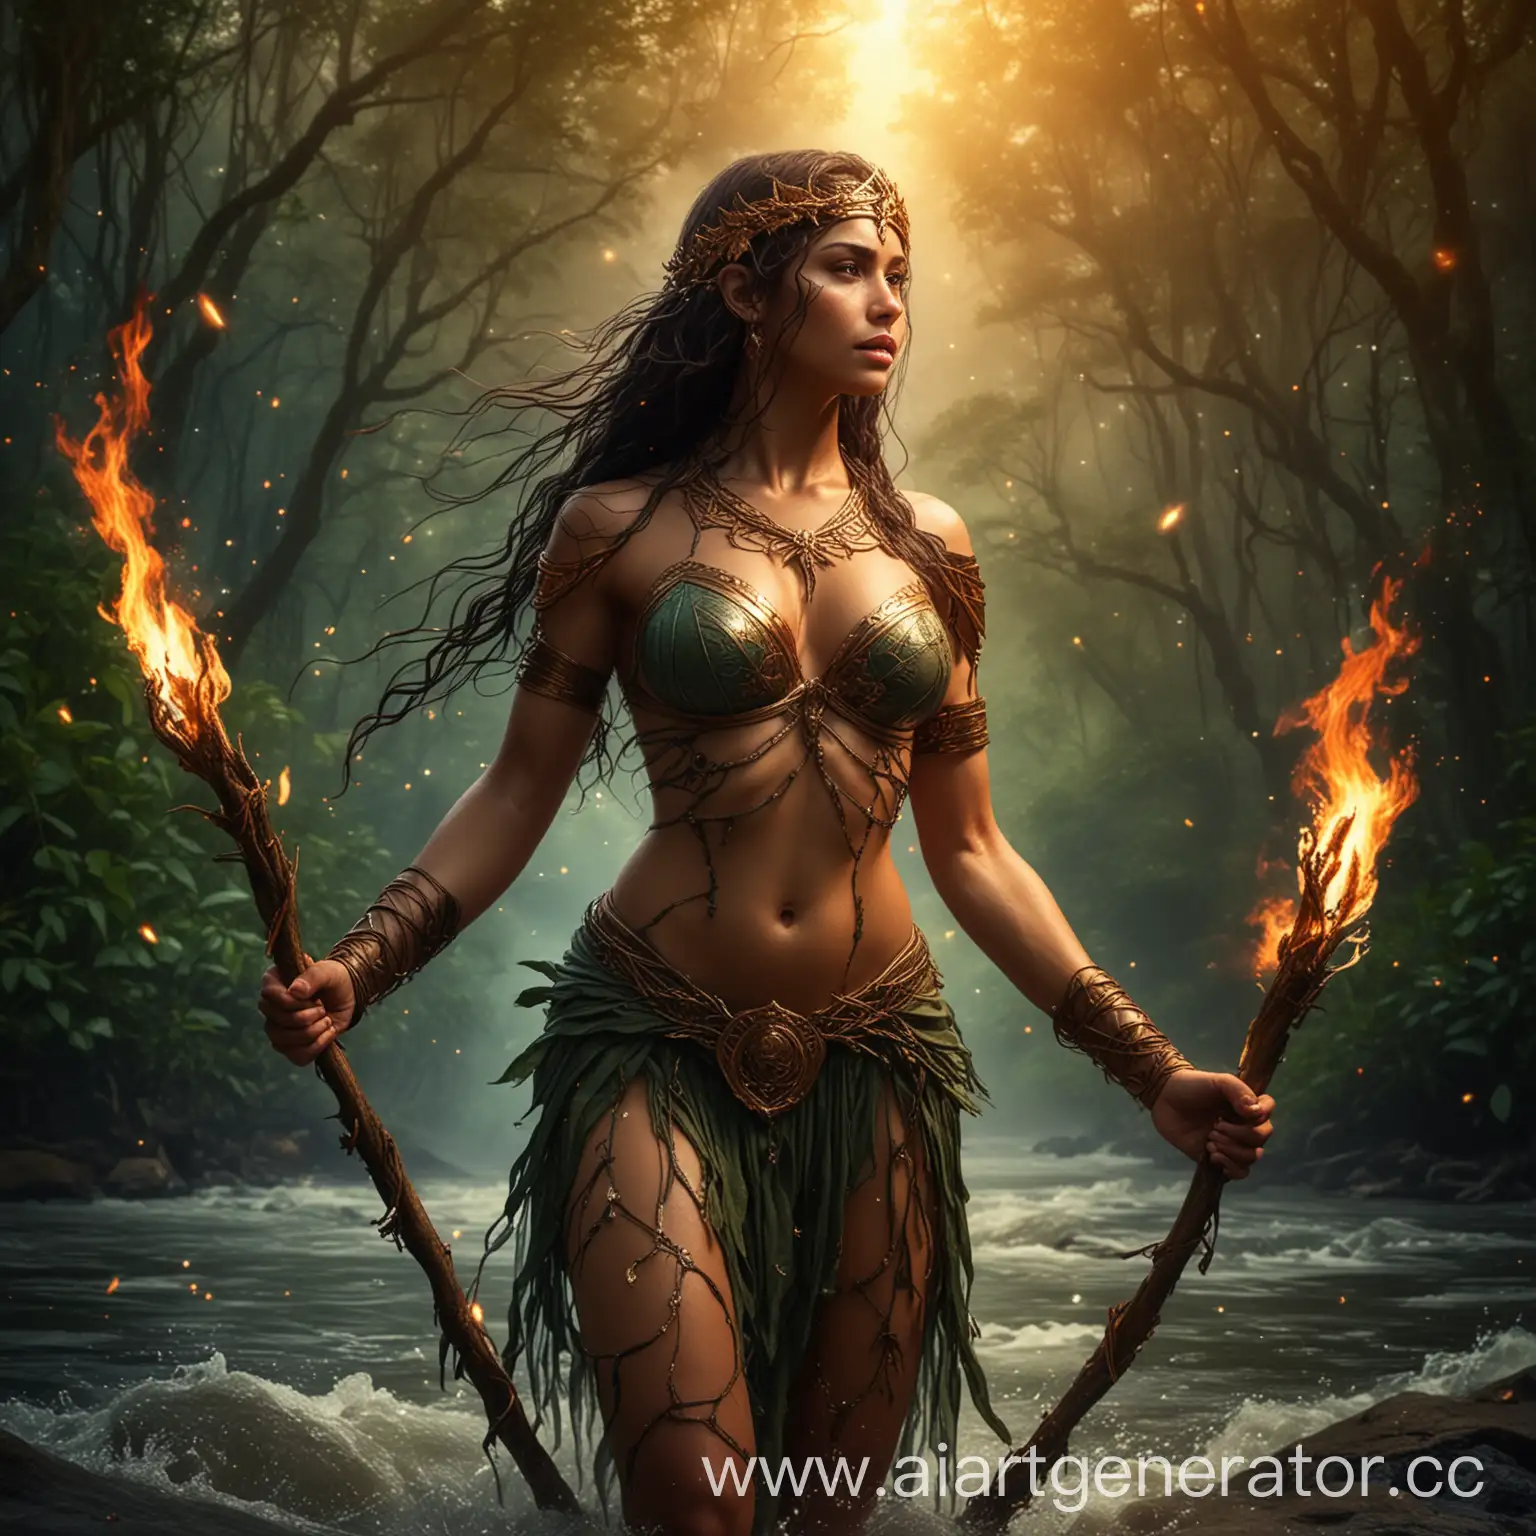 Goddess-Warrior-Amidst-Lush-Amazon-River-with-Fiery-Stars